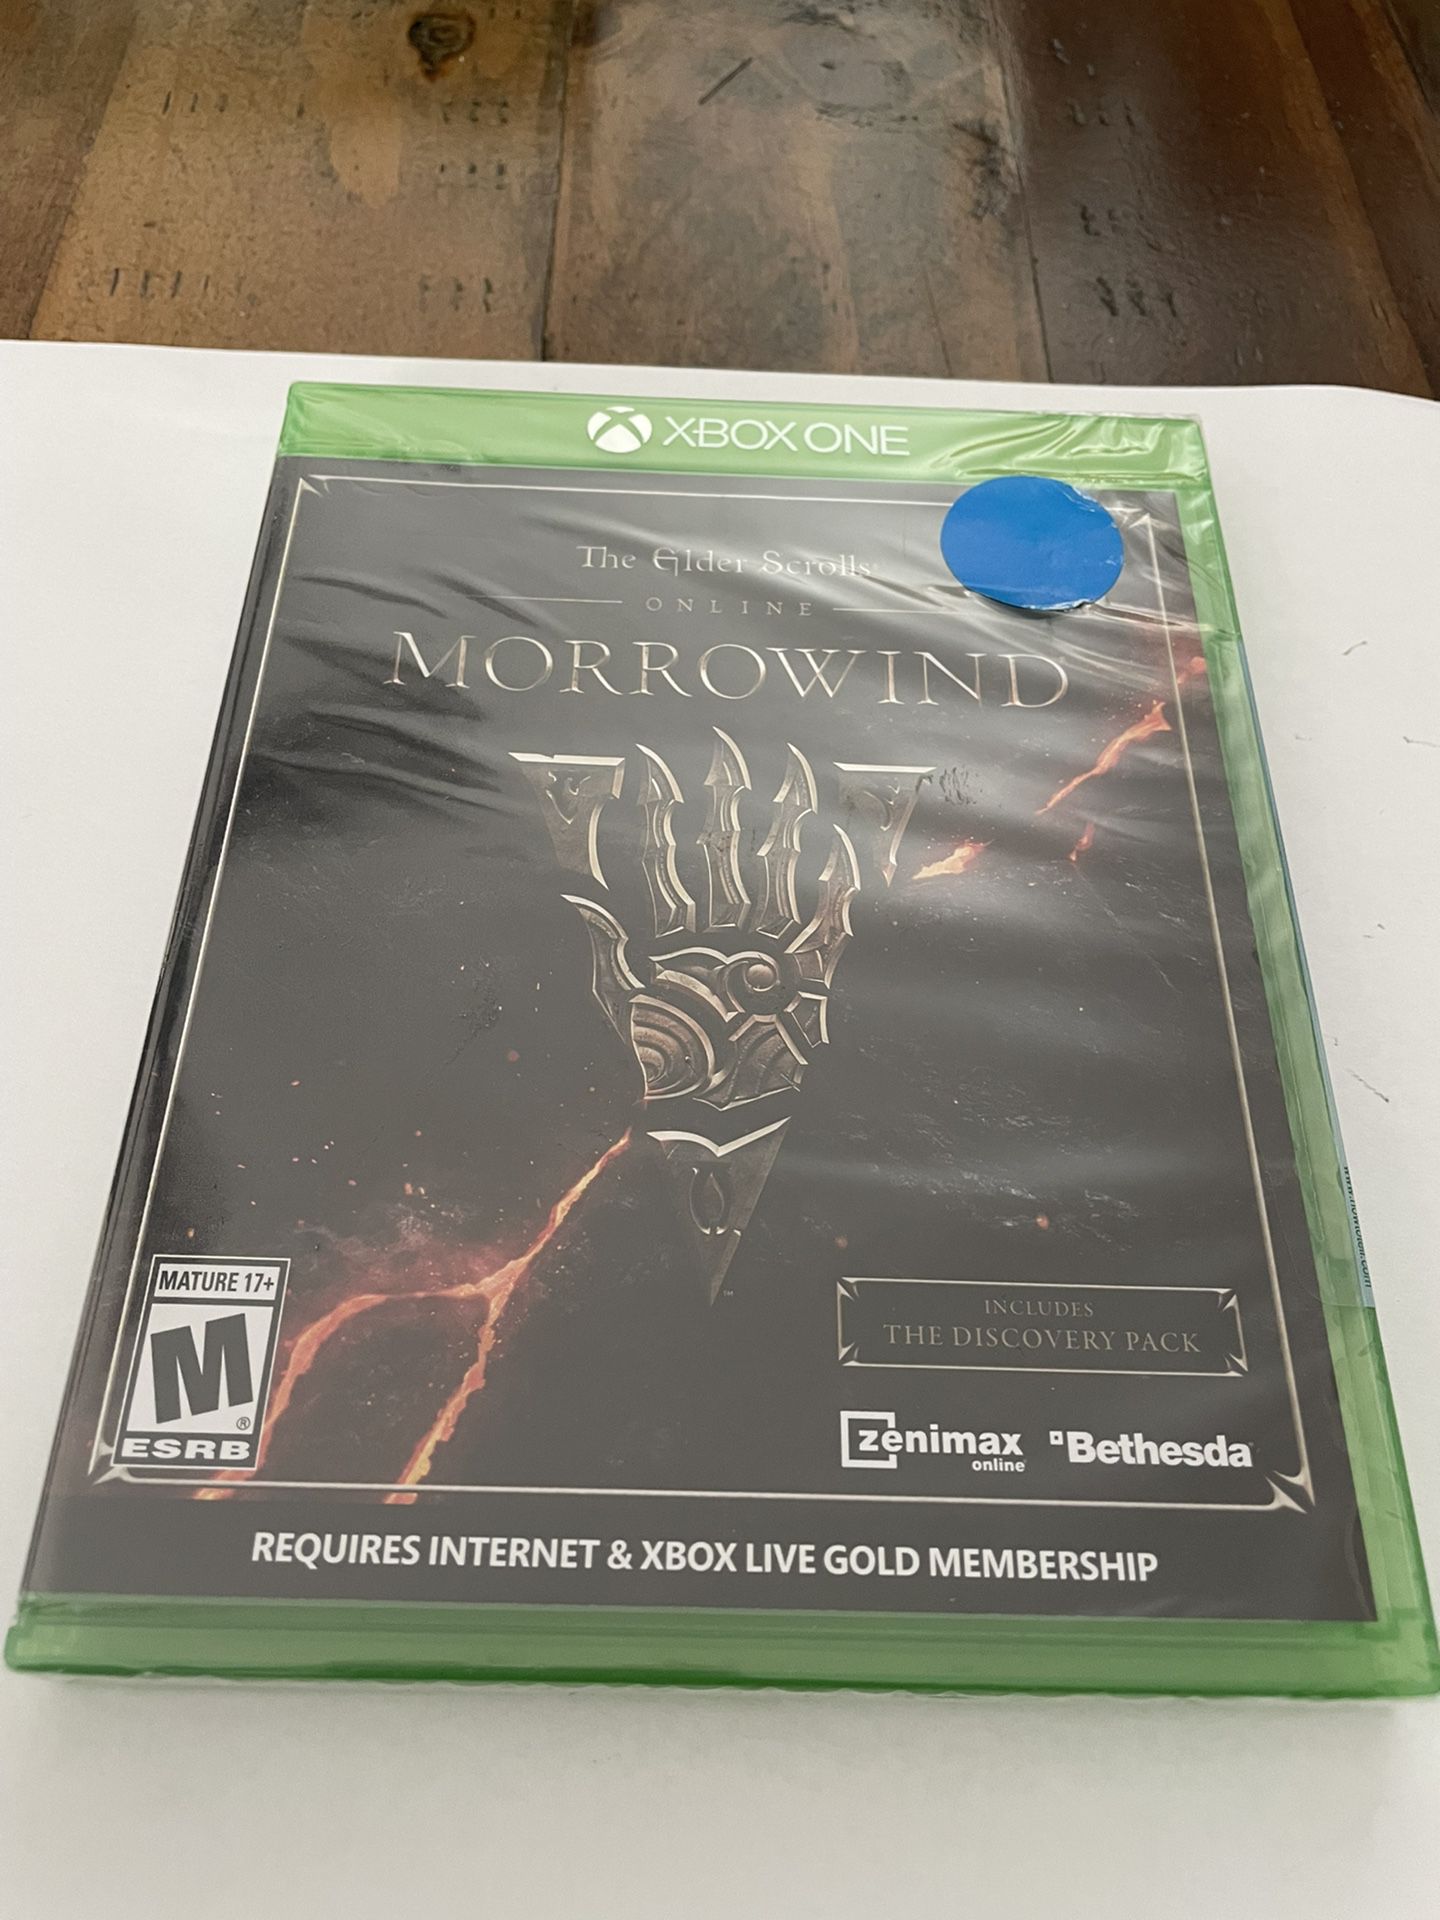 New & Sealed Microsoft Xbox One The Elder Scrolls Online Morrowind Game By Bethesda. 